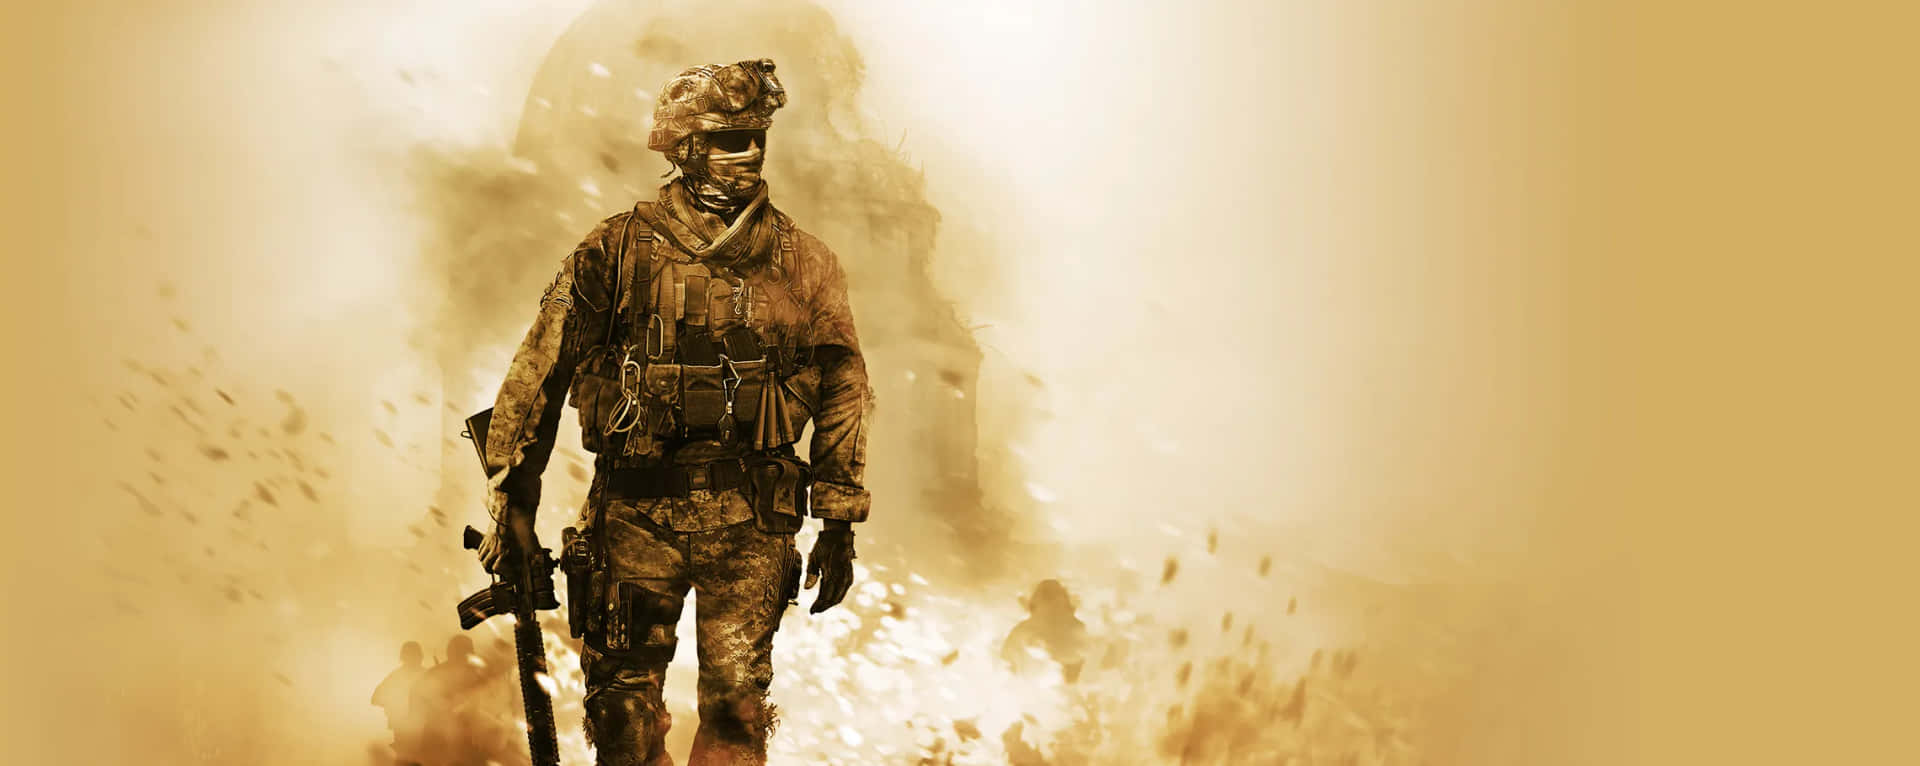 Erlebedeine Warzone-action In Call Of Duty Modern Warfare Live. Wallpaper